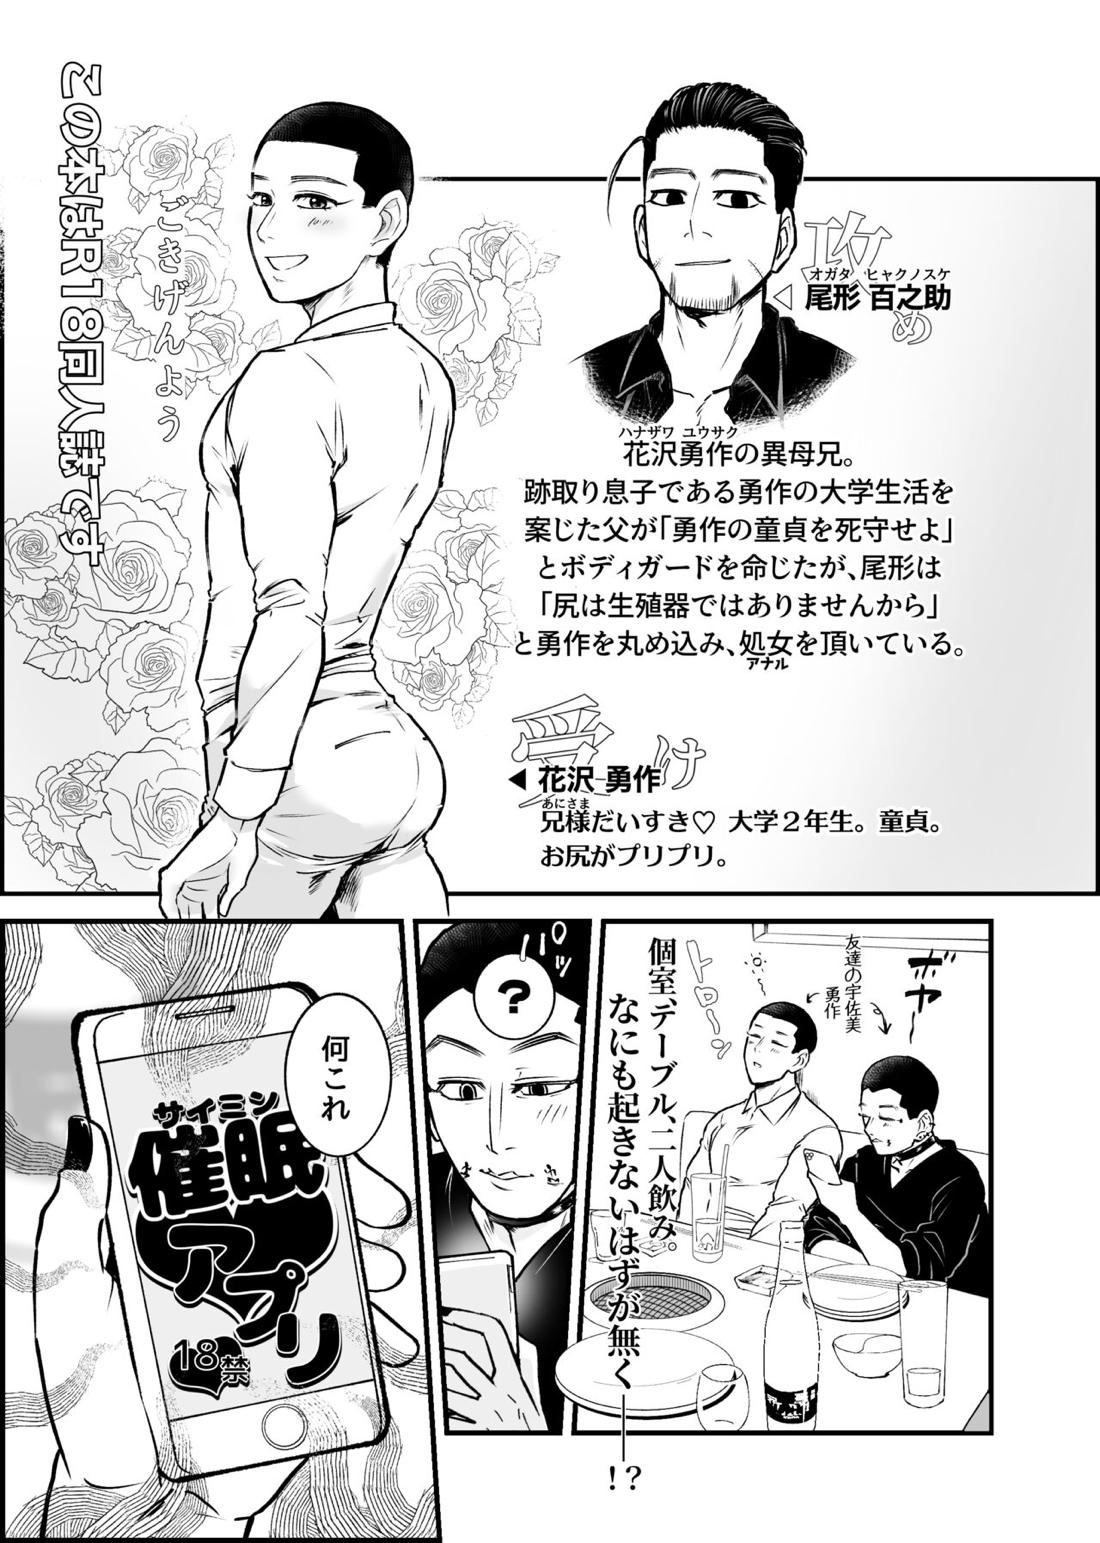 【BL漫画 ゴールデンカムイ】催眠アプリで女体化したと思い込んだ花沢勇作が治す為にボーイズラブエッチしちゃう尾形百之助4